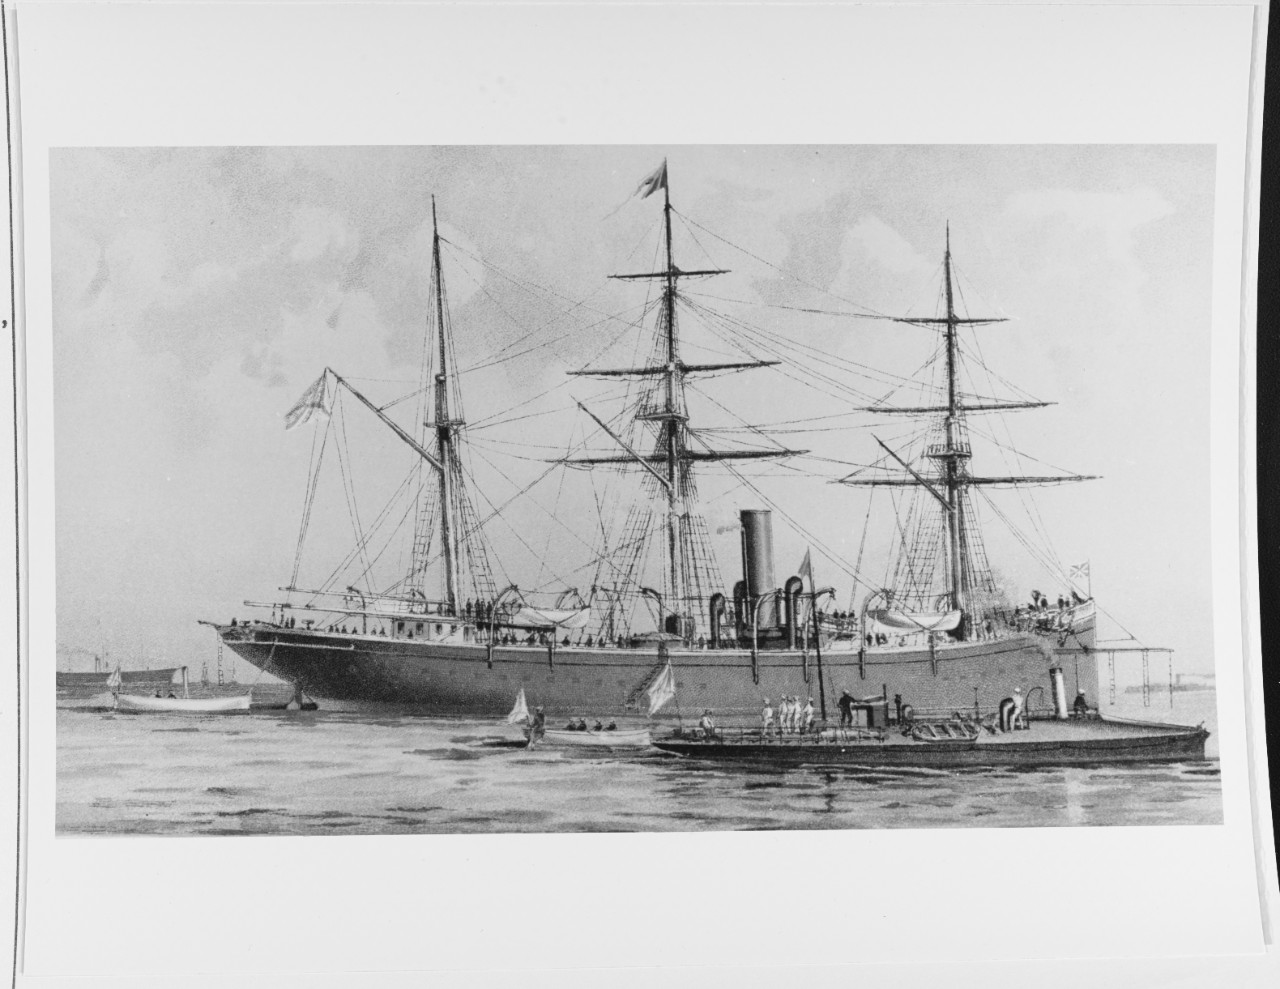 AFRIKA (Russian cruiser, 1877)